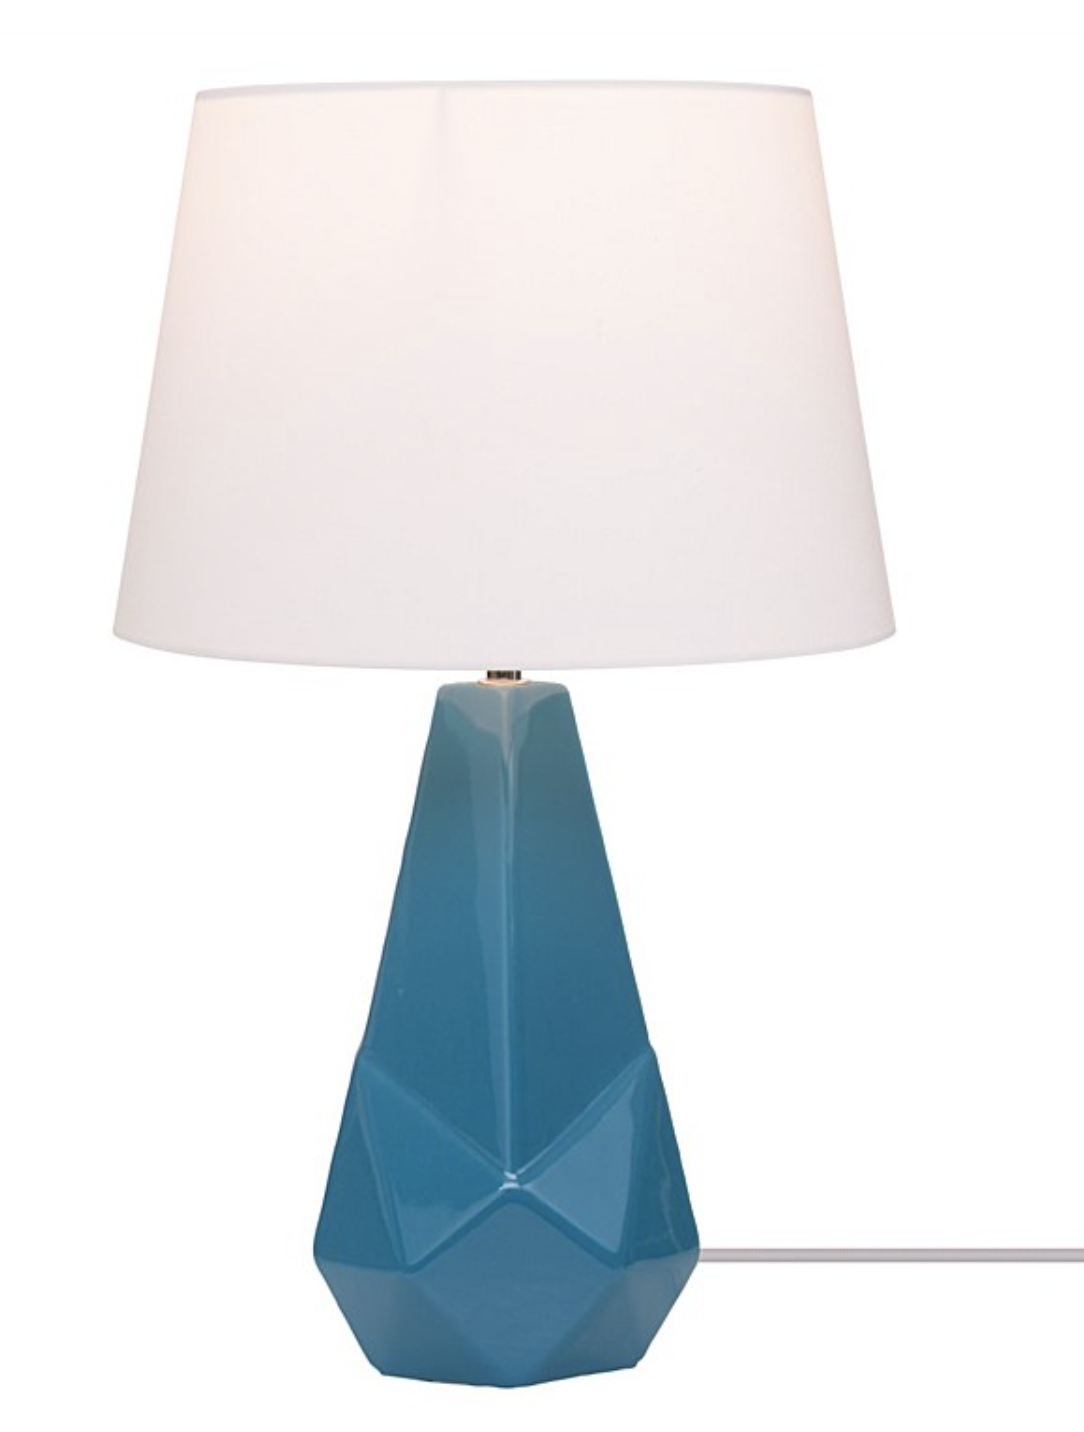 Freedom Furniture Finn Table lamp